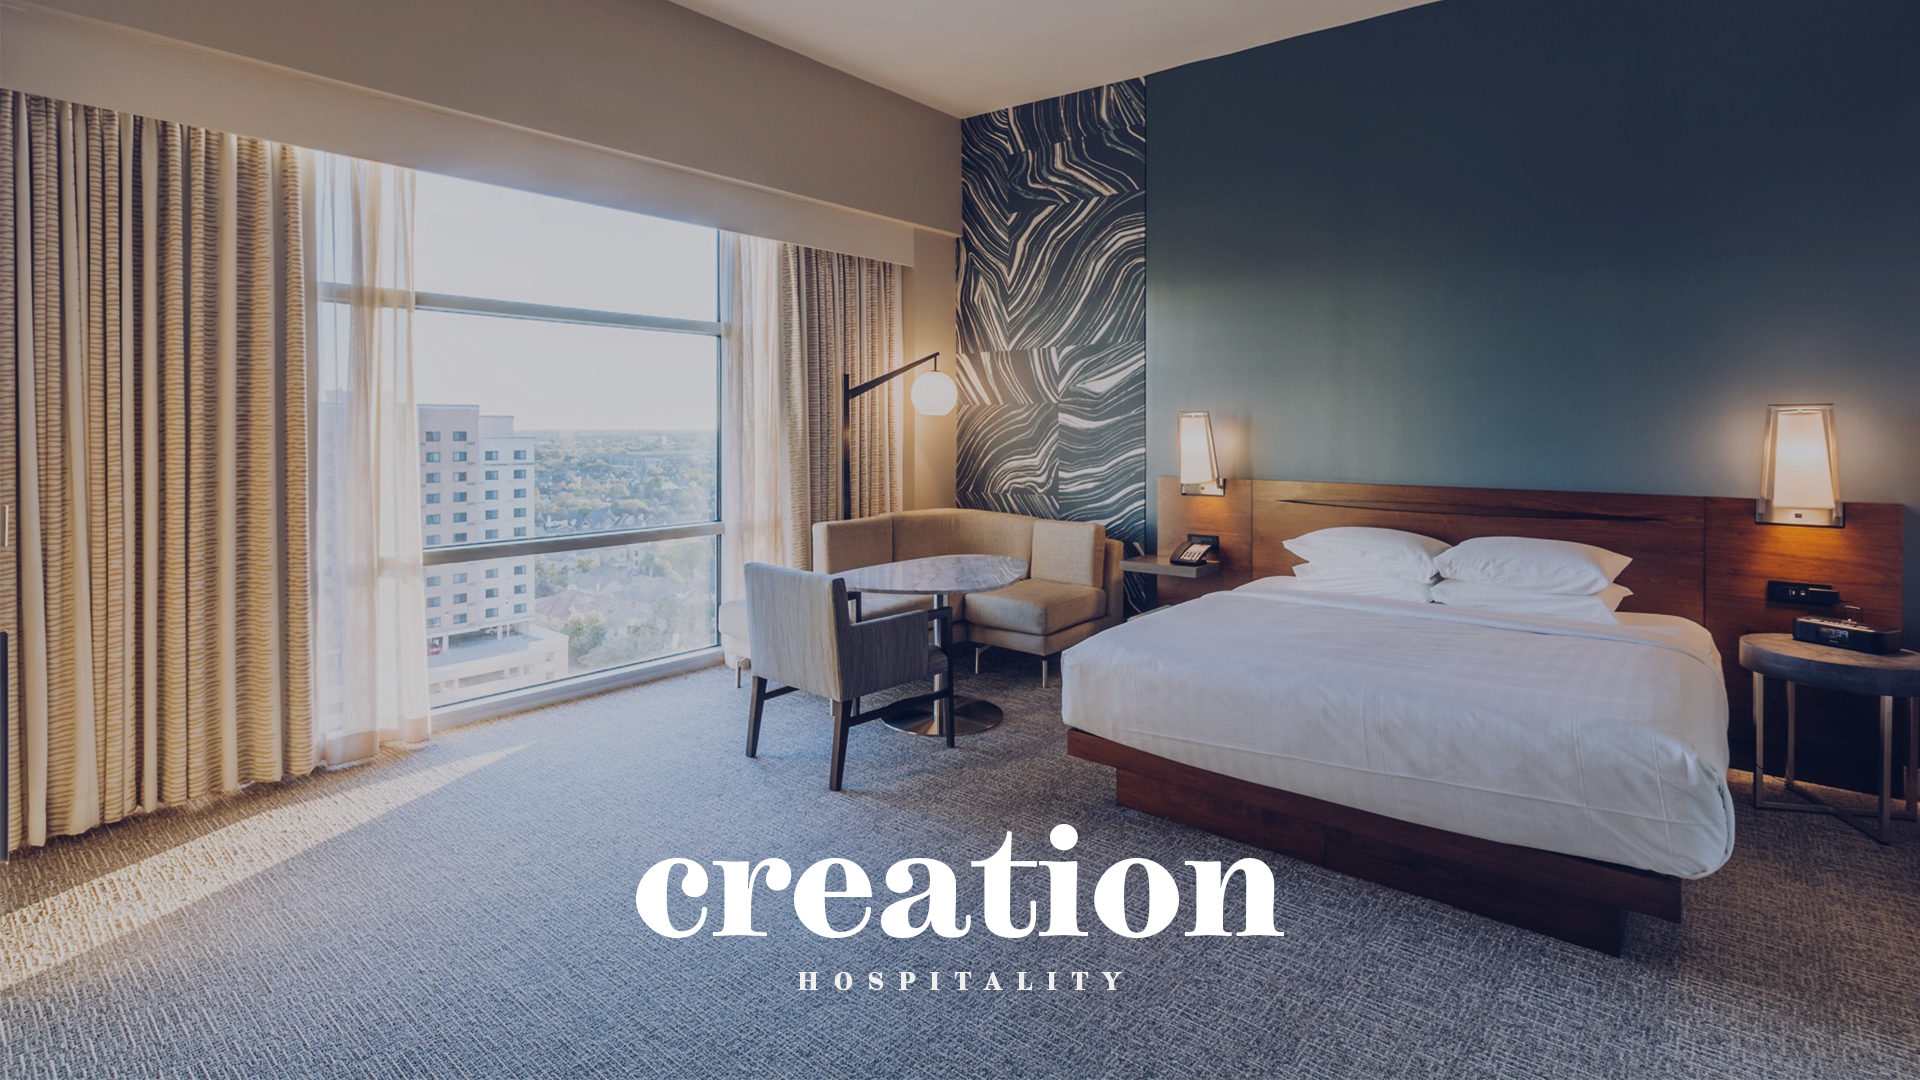 Creation Hospitality Website Design and Development